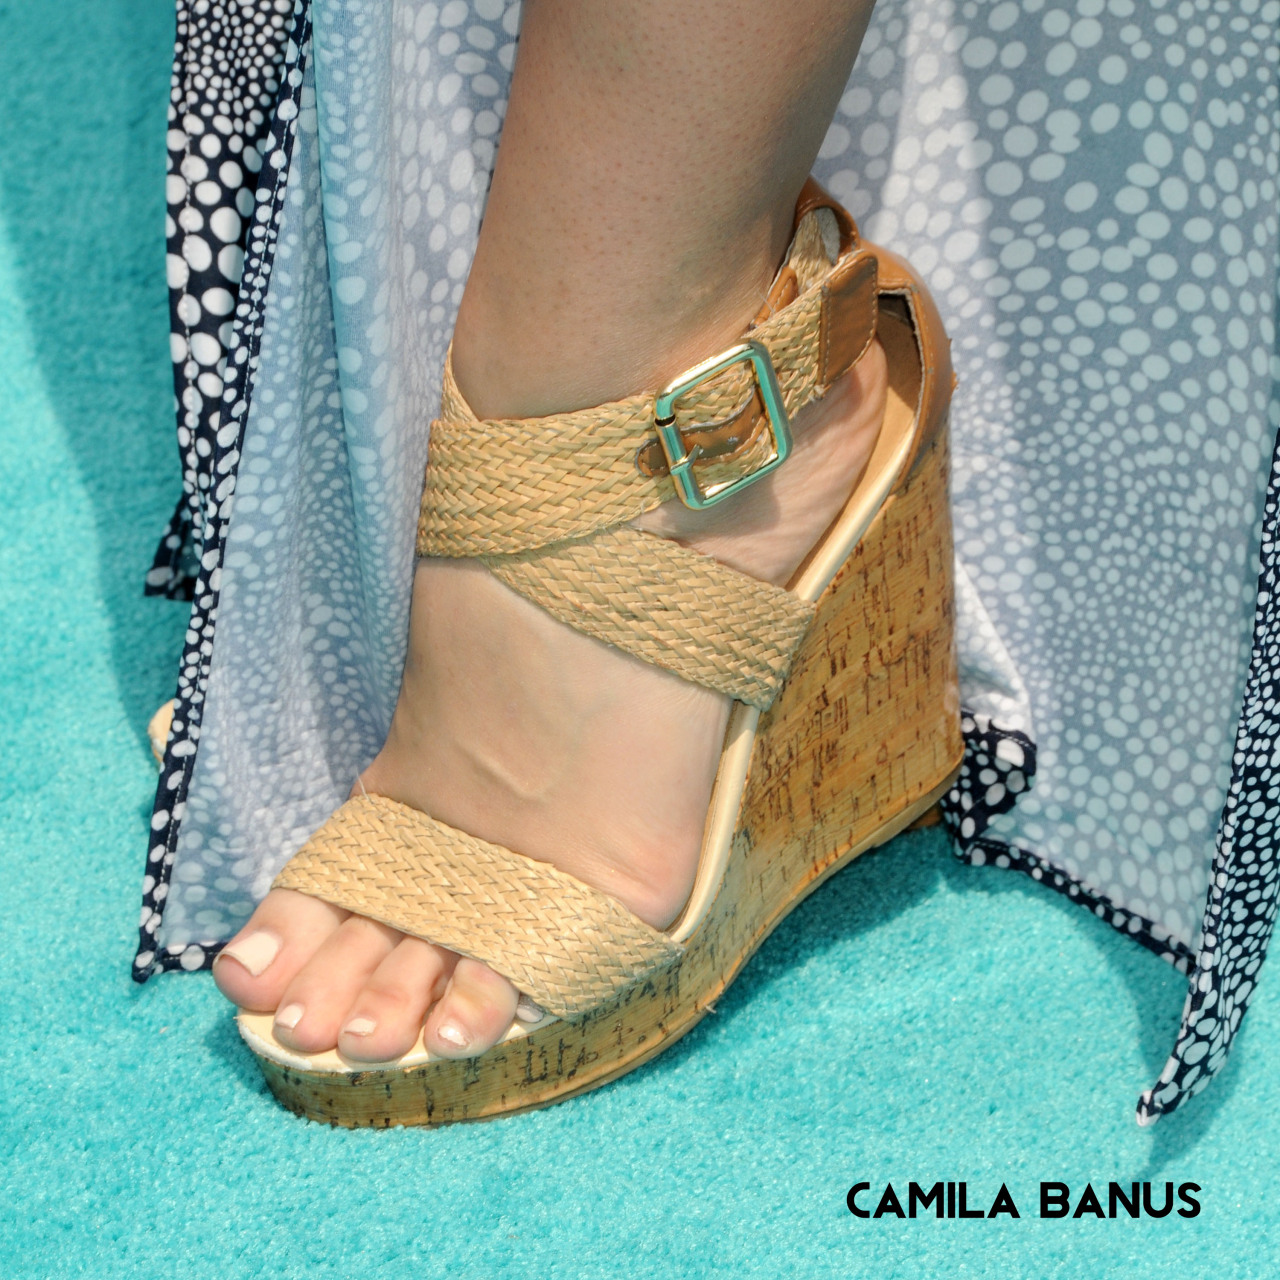 celebped: Camila Banus Feet